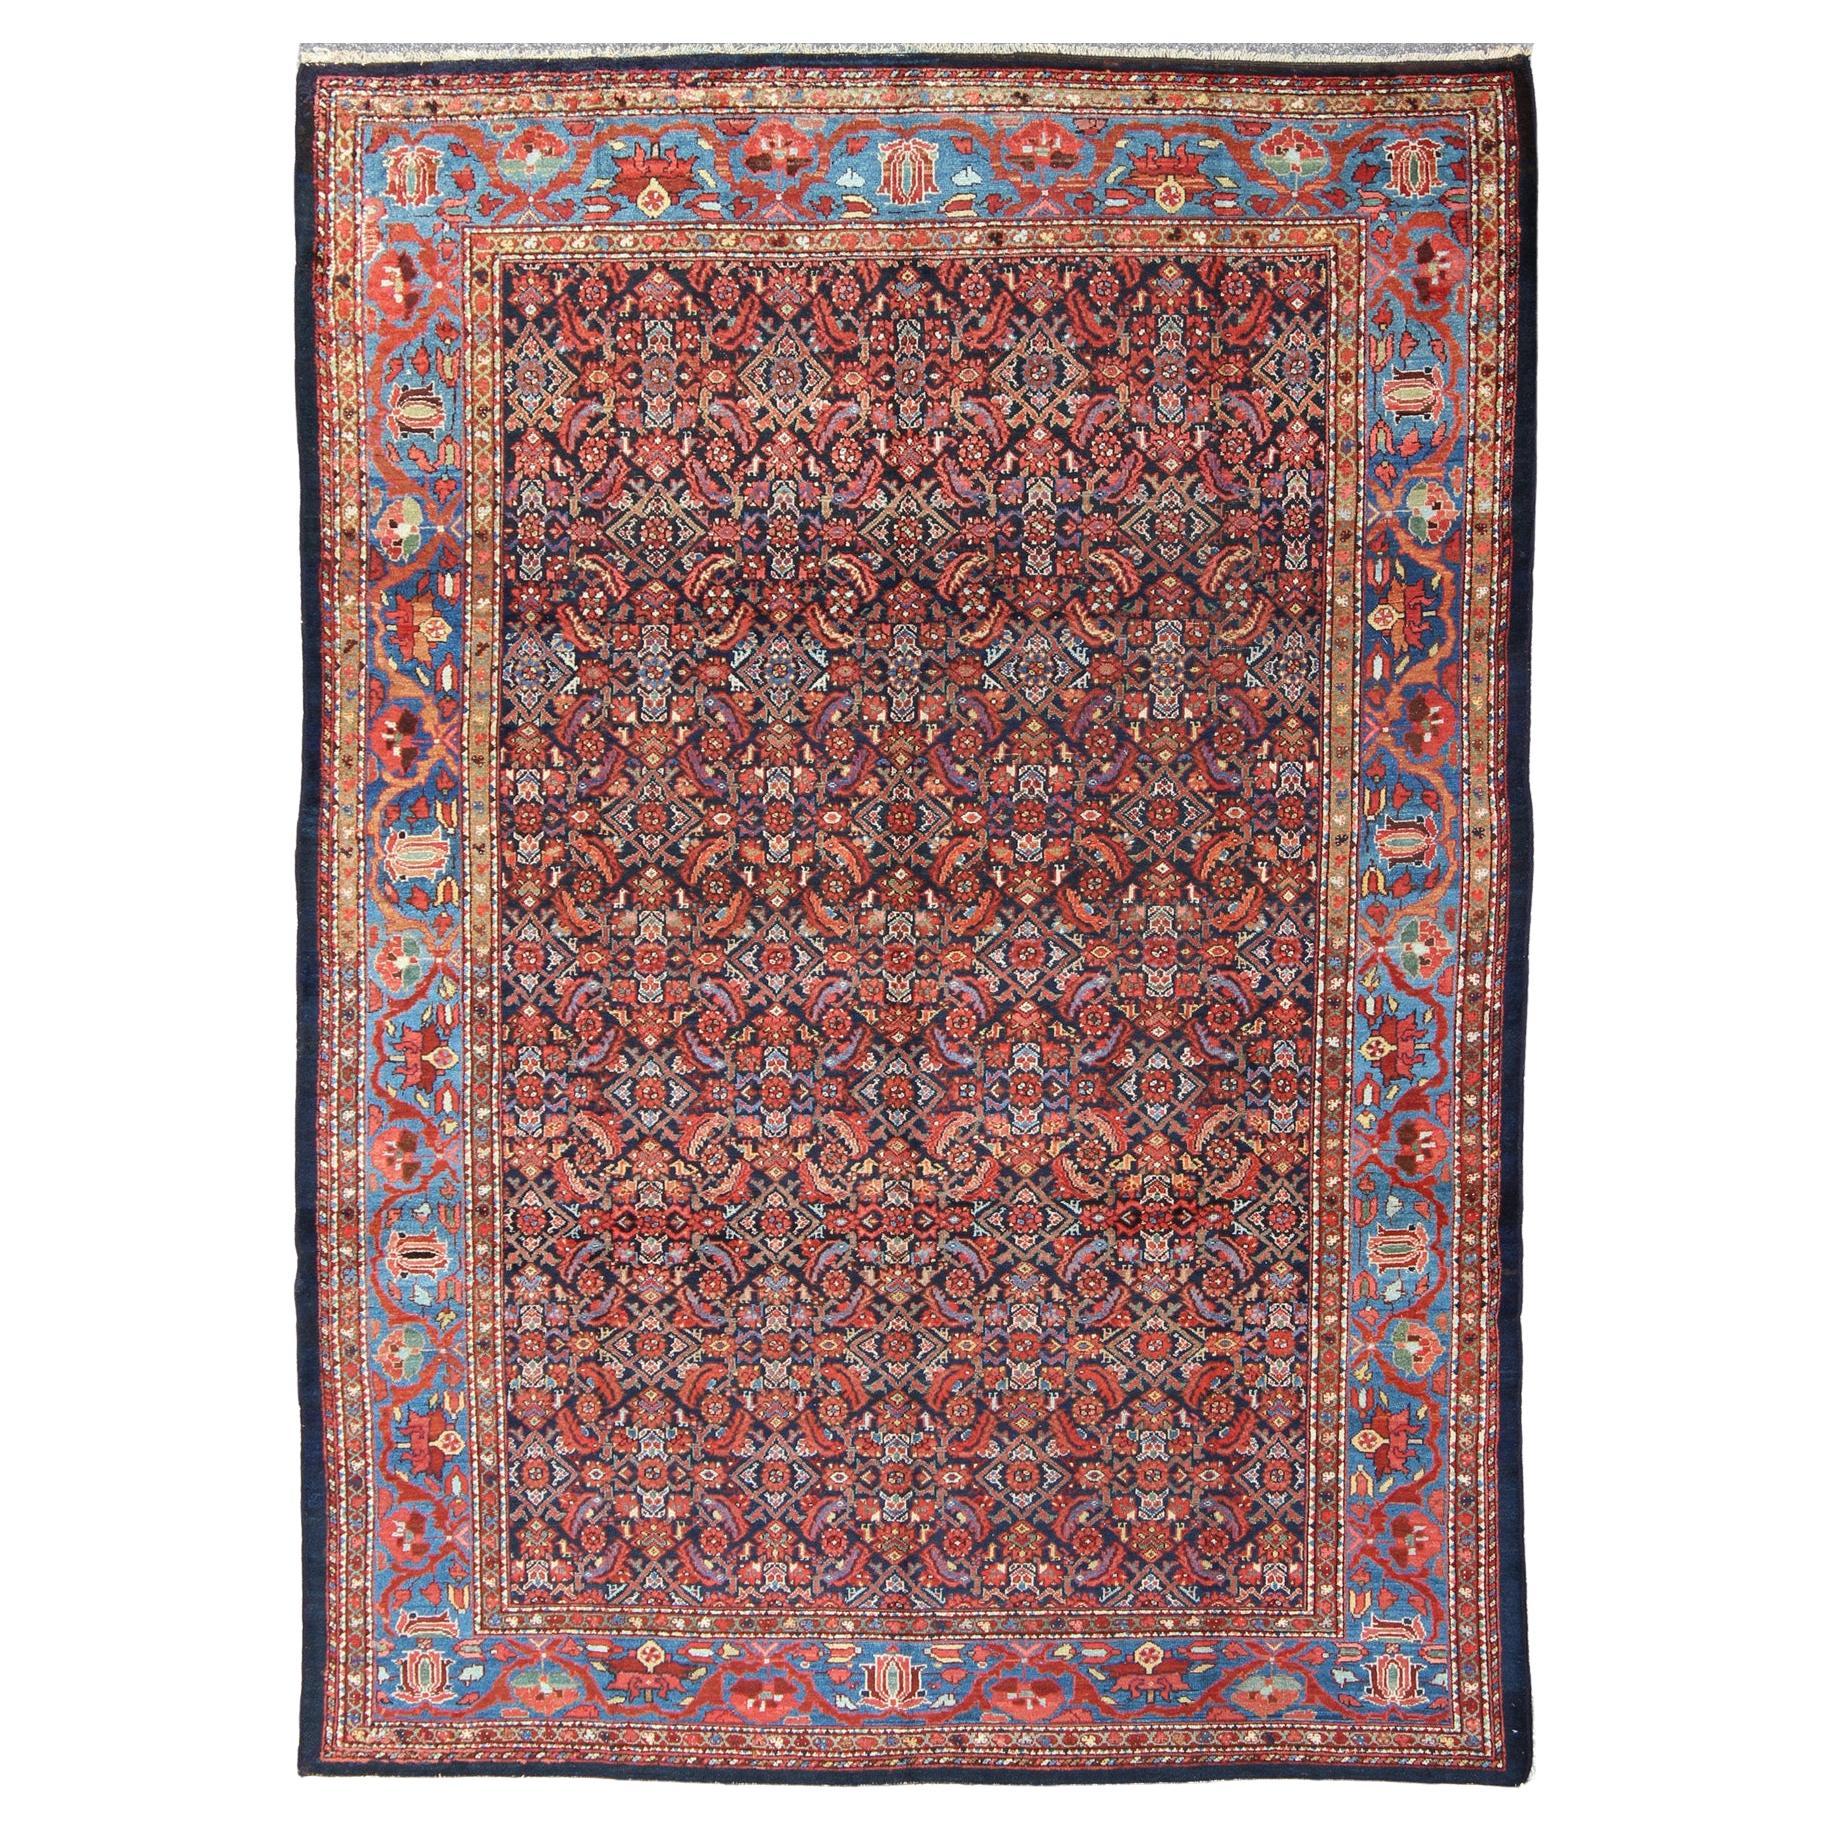  Multi Color Antique Persian Malayer Rug with All Over Herati Design 